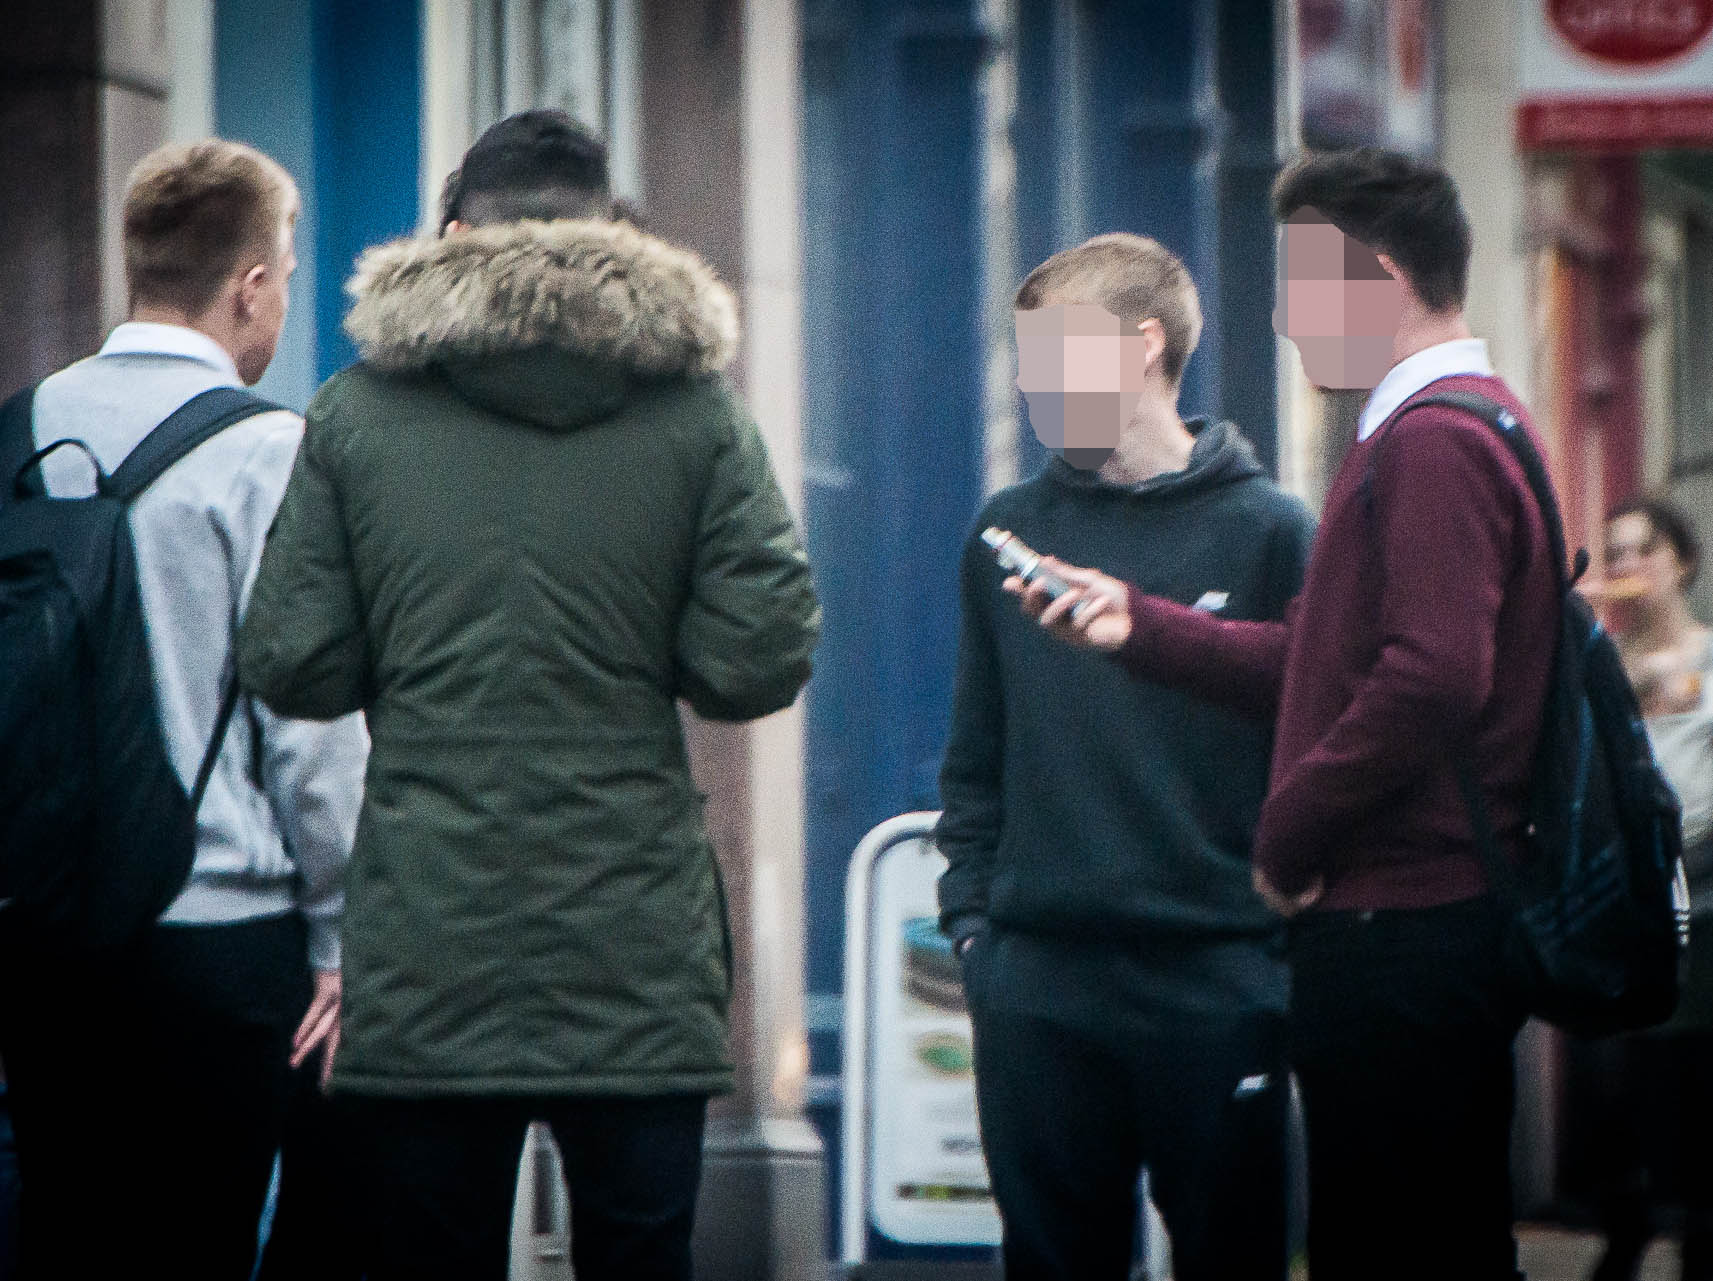 Scots schoolkids using e-cigs as gateway to smoking warn researchers